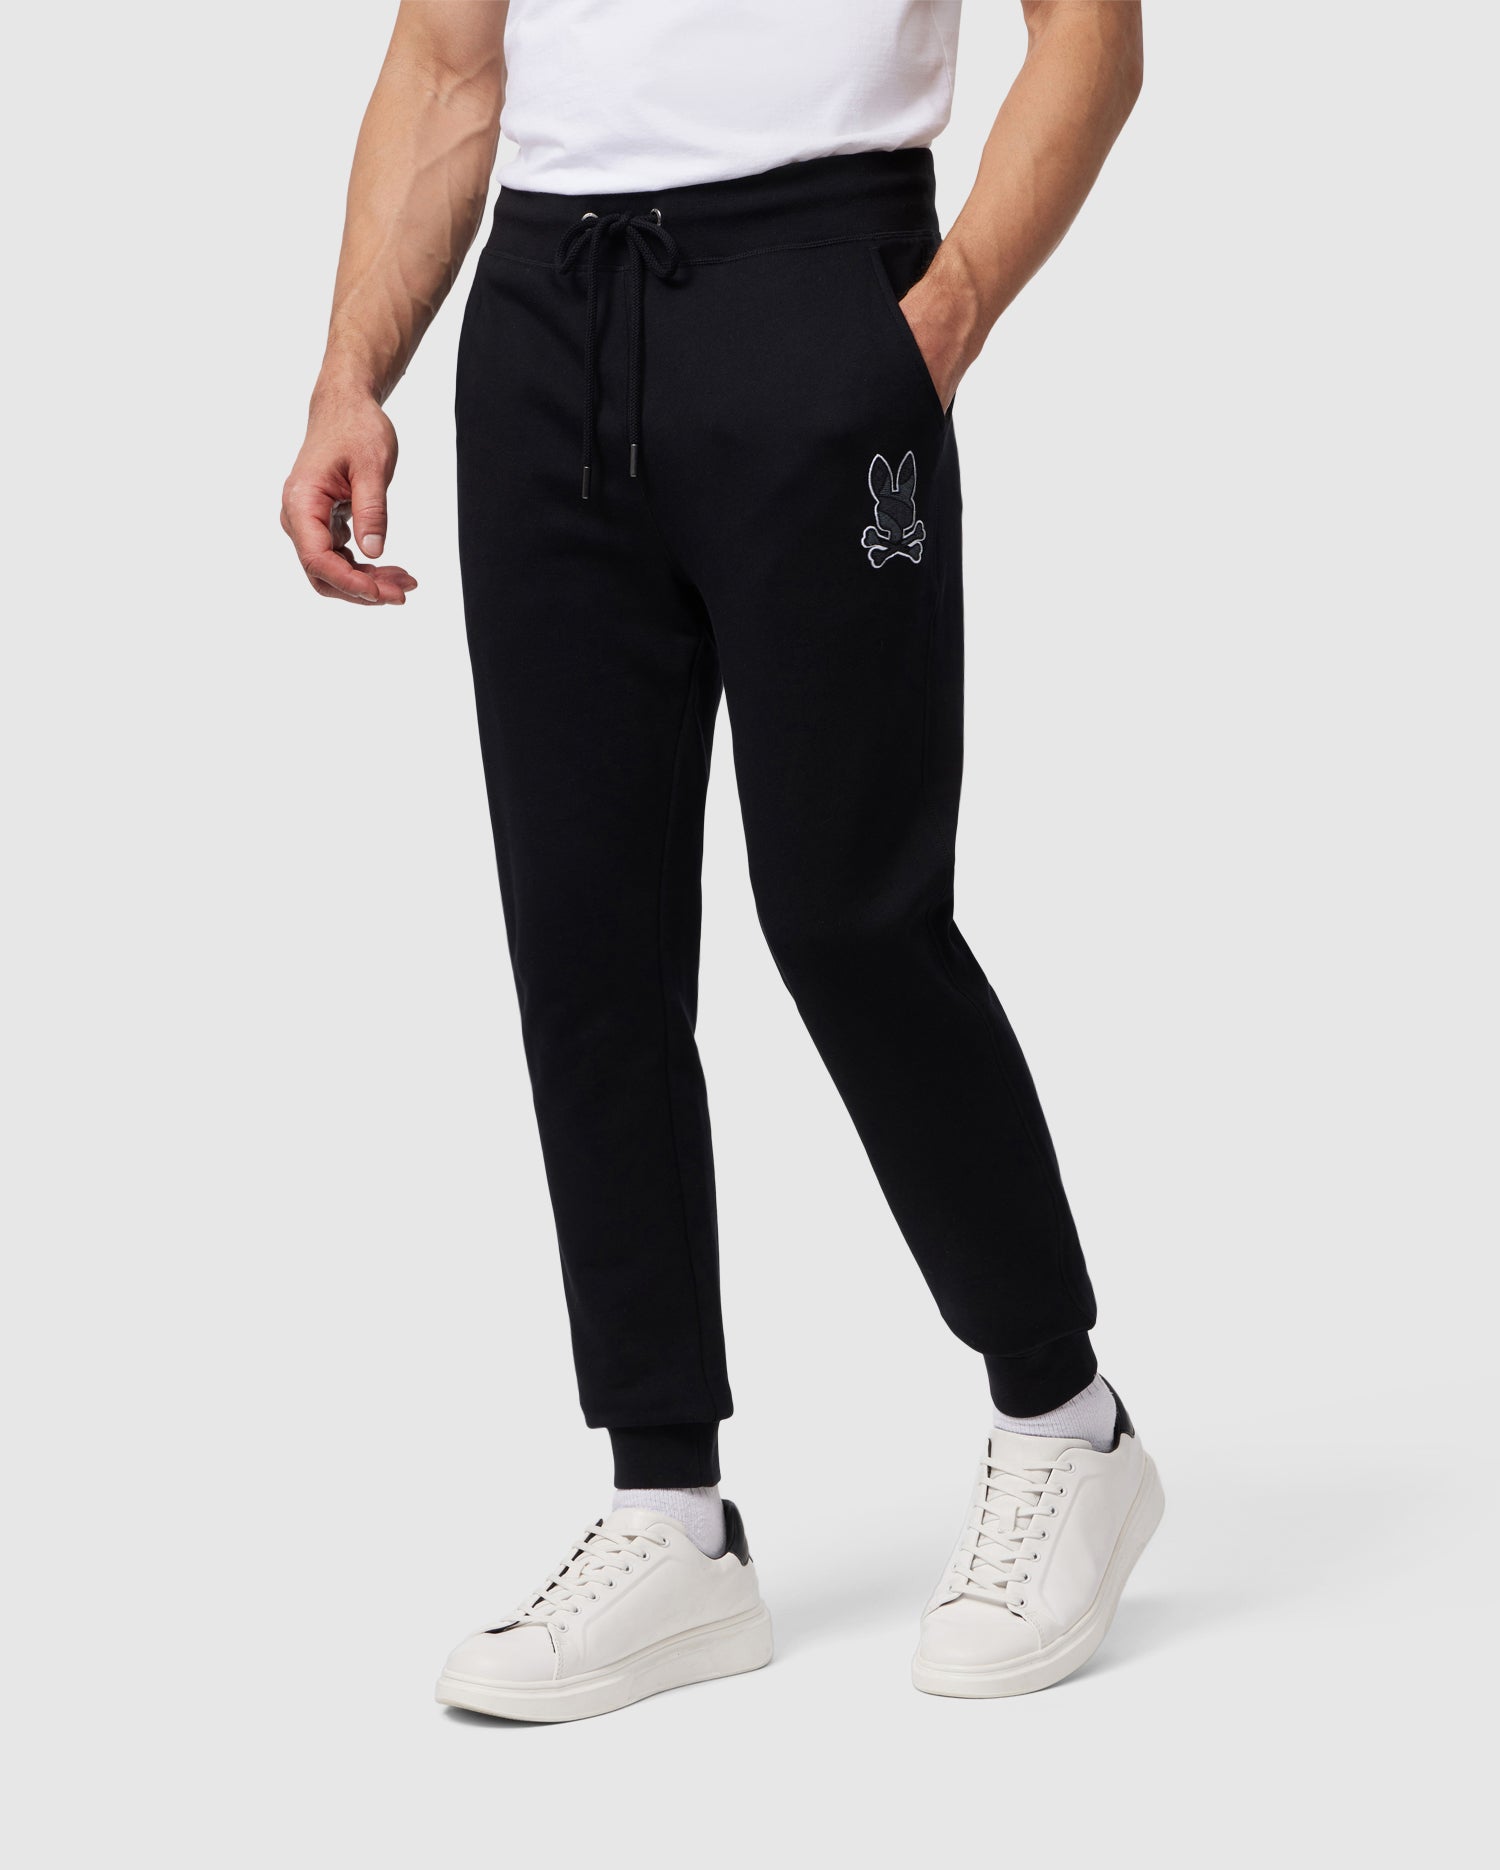 Nike Men Sweatpants Stretch Activewear Pants for Men for sale